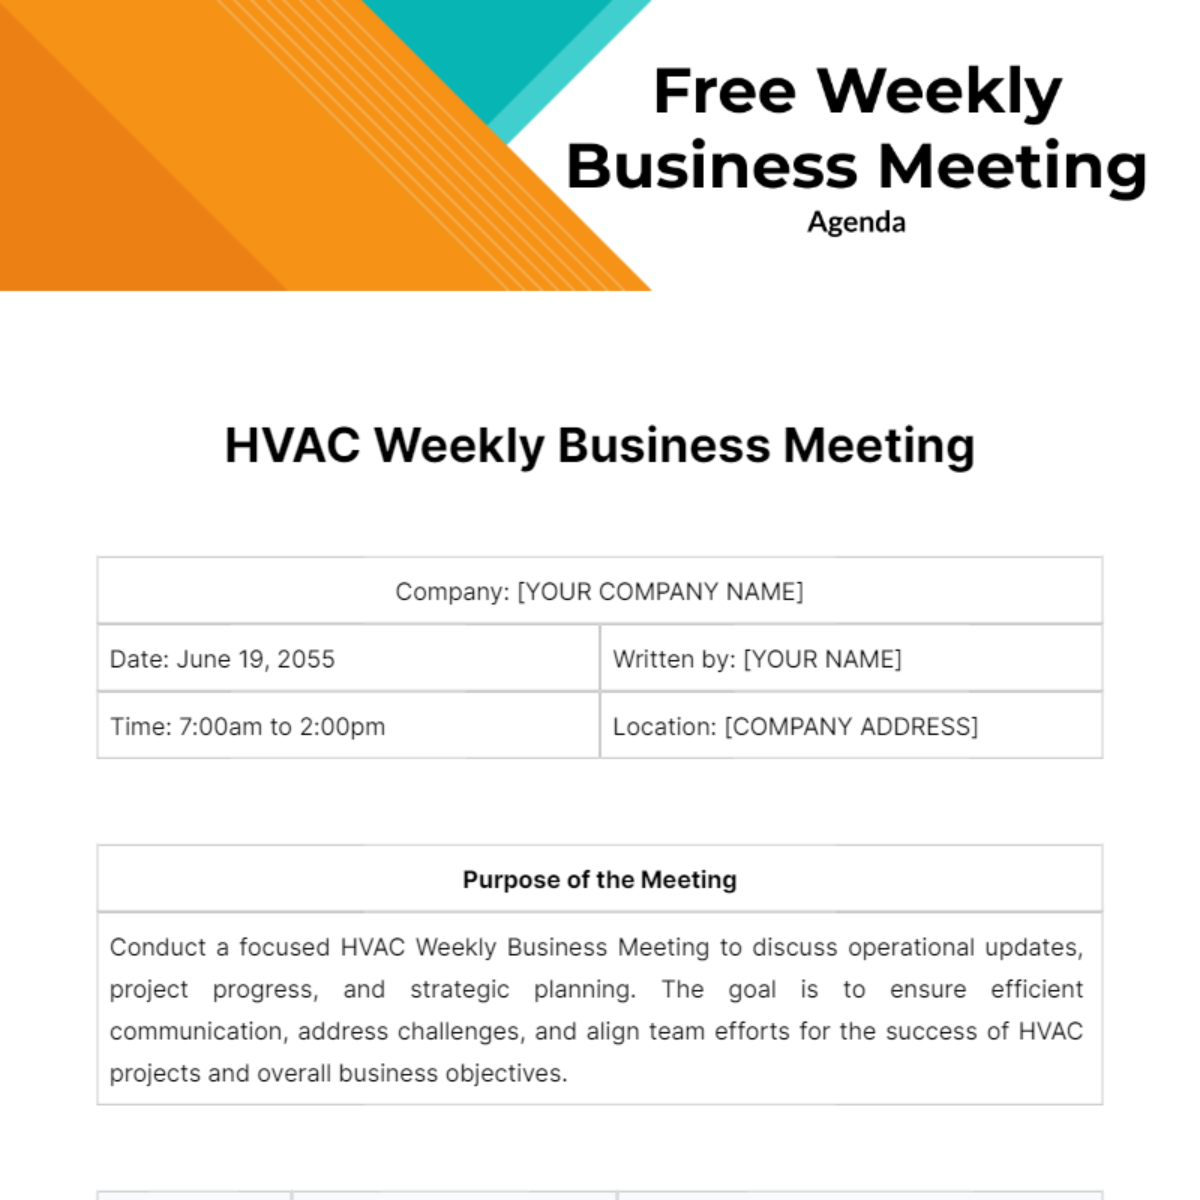 Free Weekly Business Meeting Agenda Template